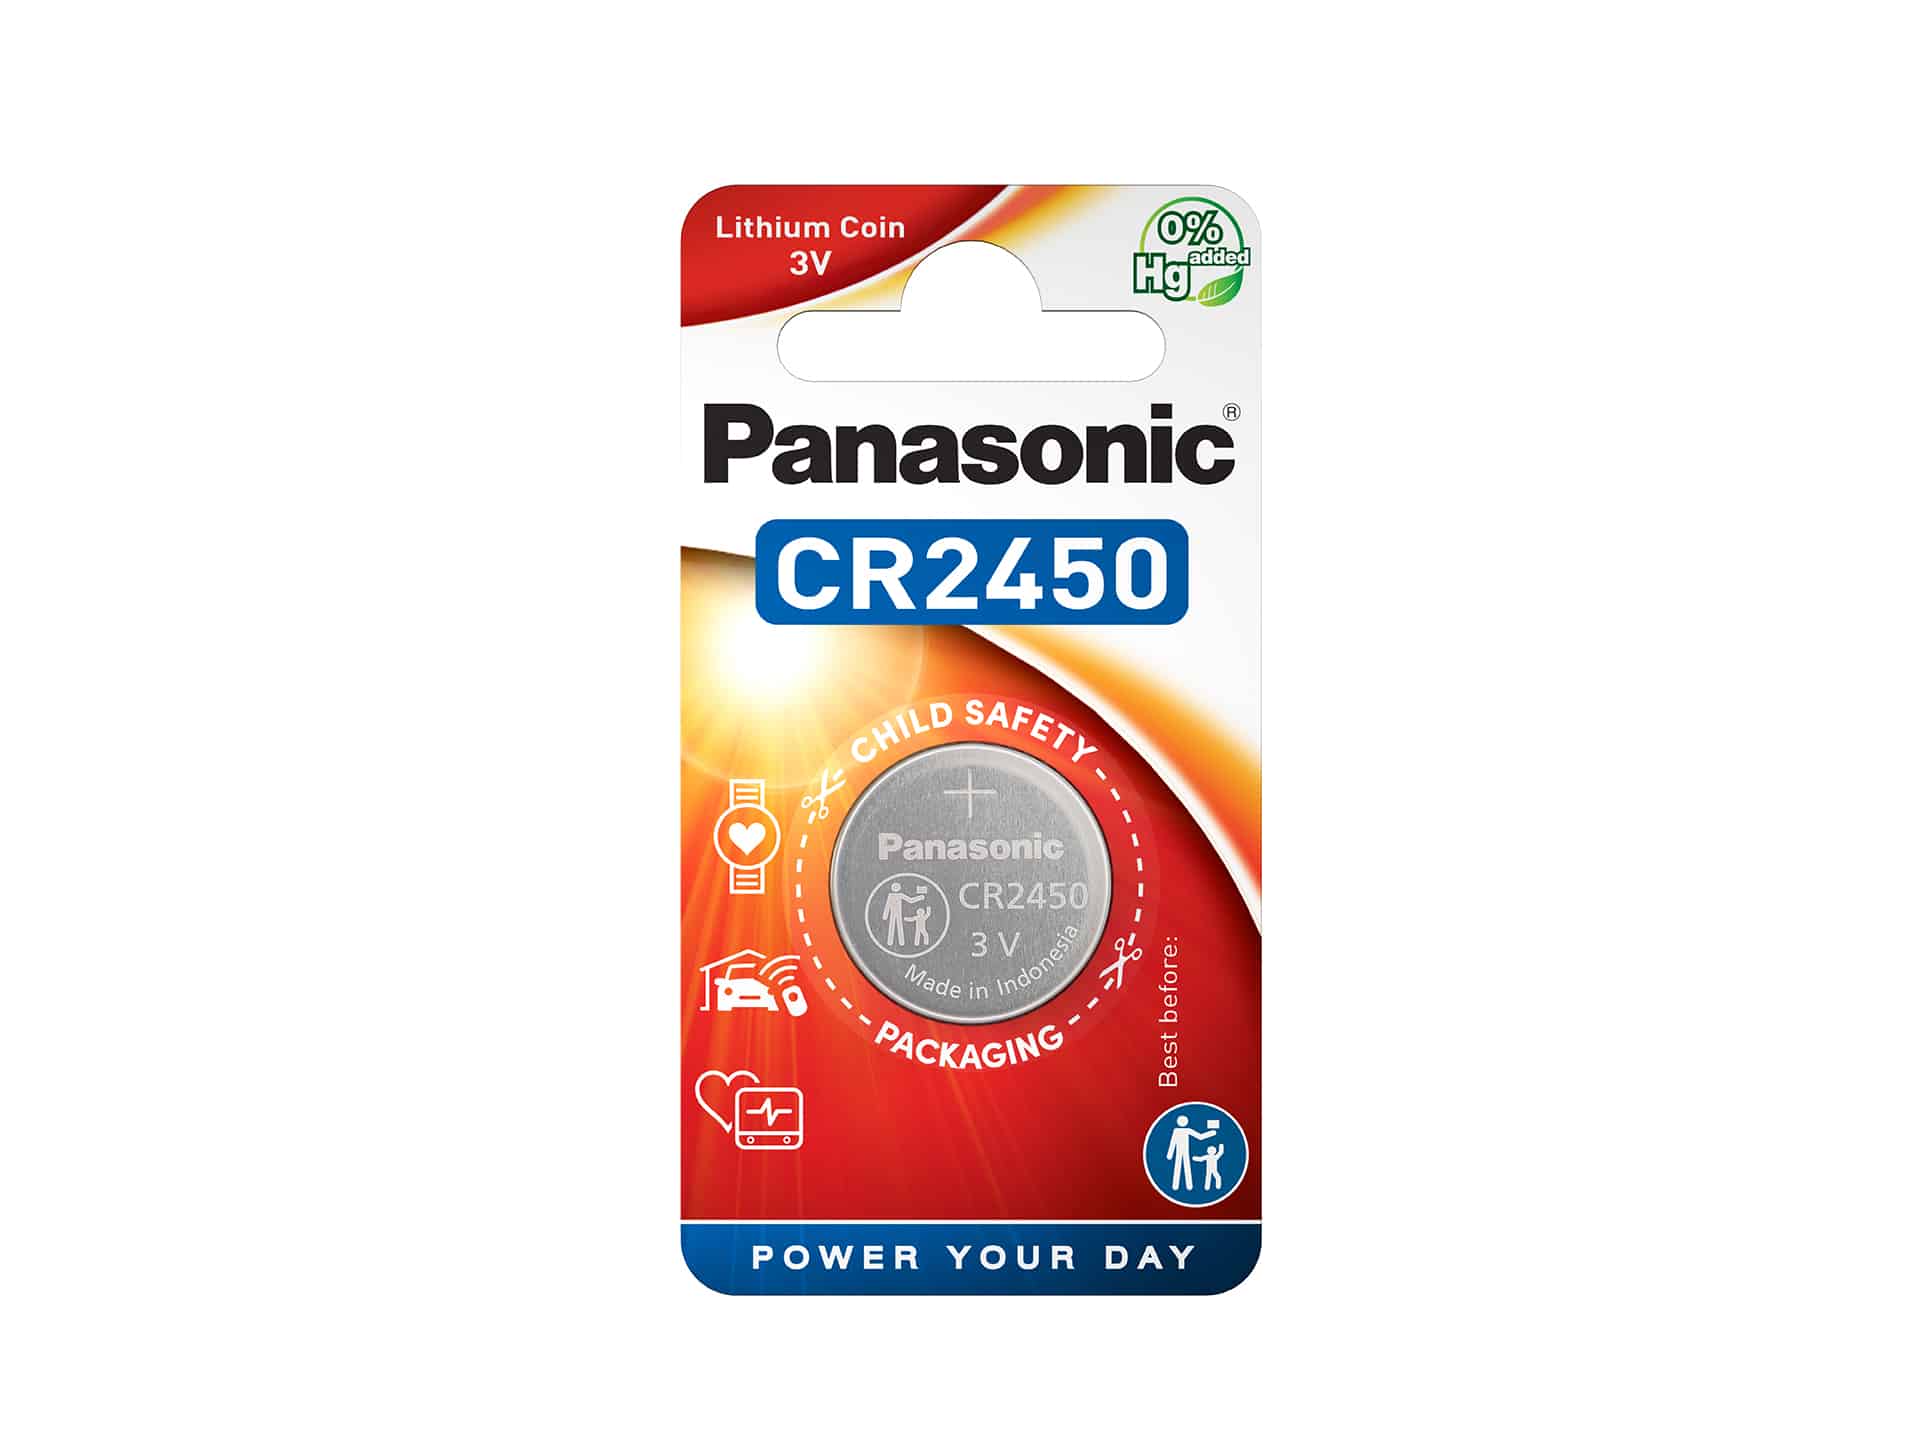 Panasonic CR2450